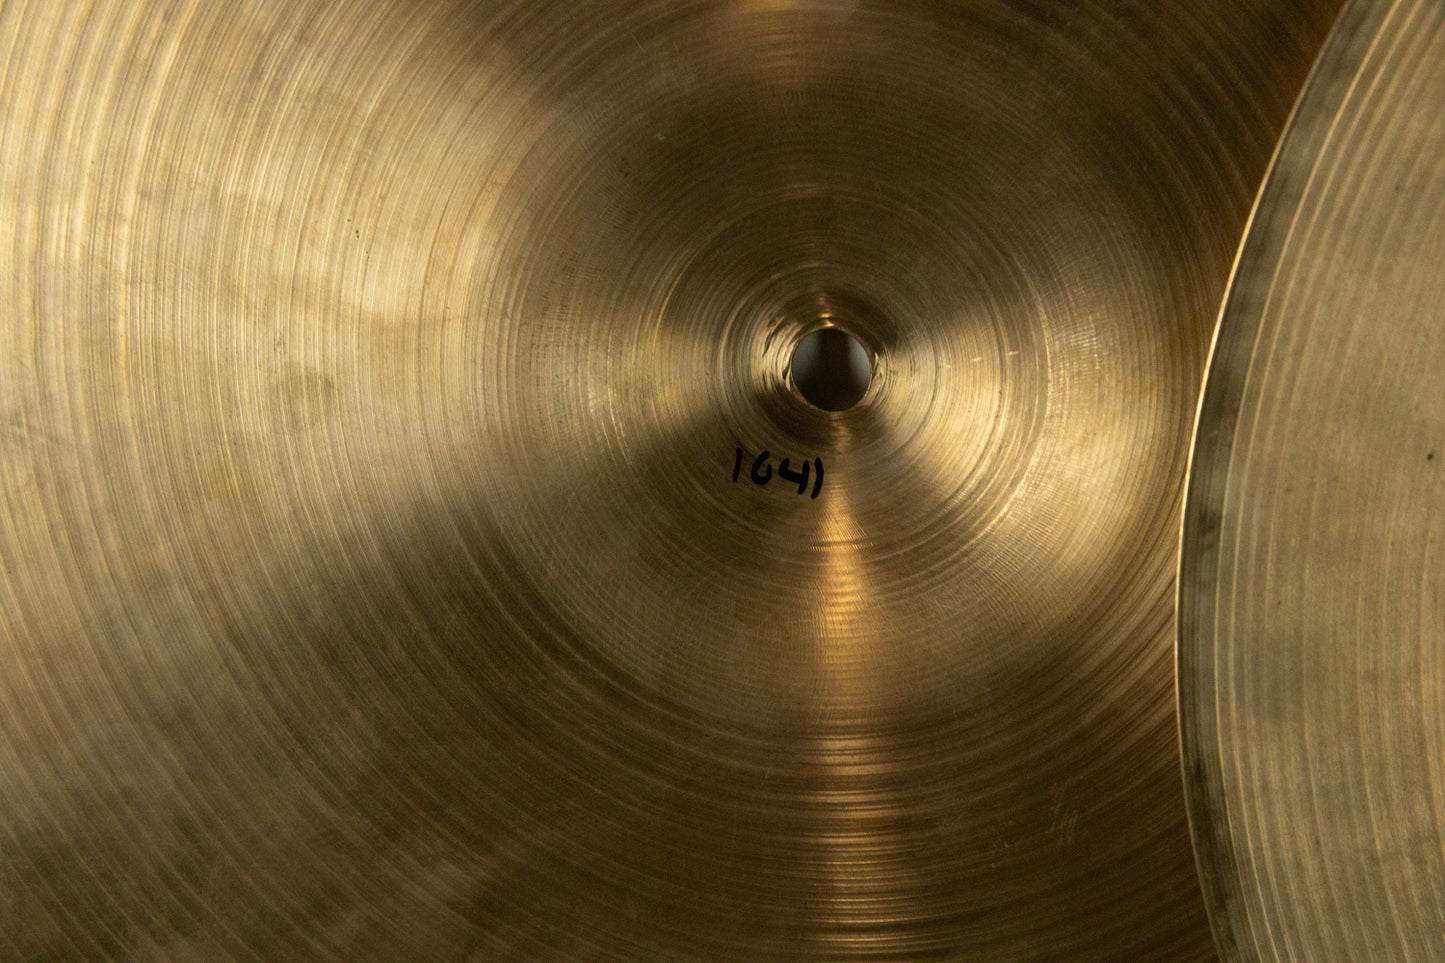 1960s Zildjian A 15" New Beat Hi Hat Cymbals 1041g 1409g